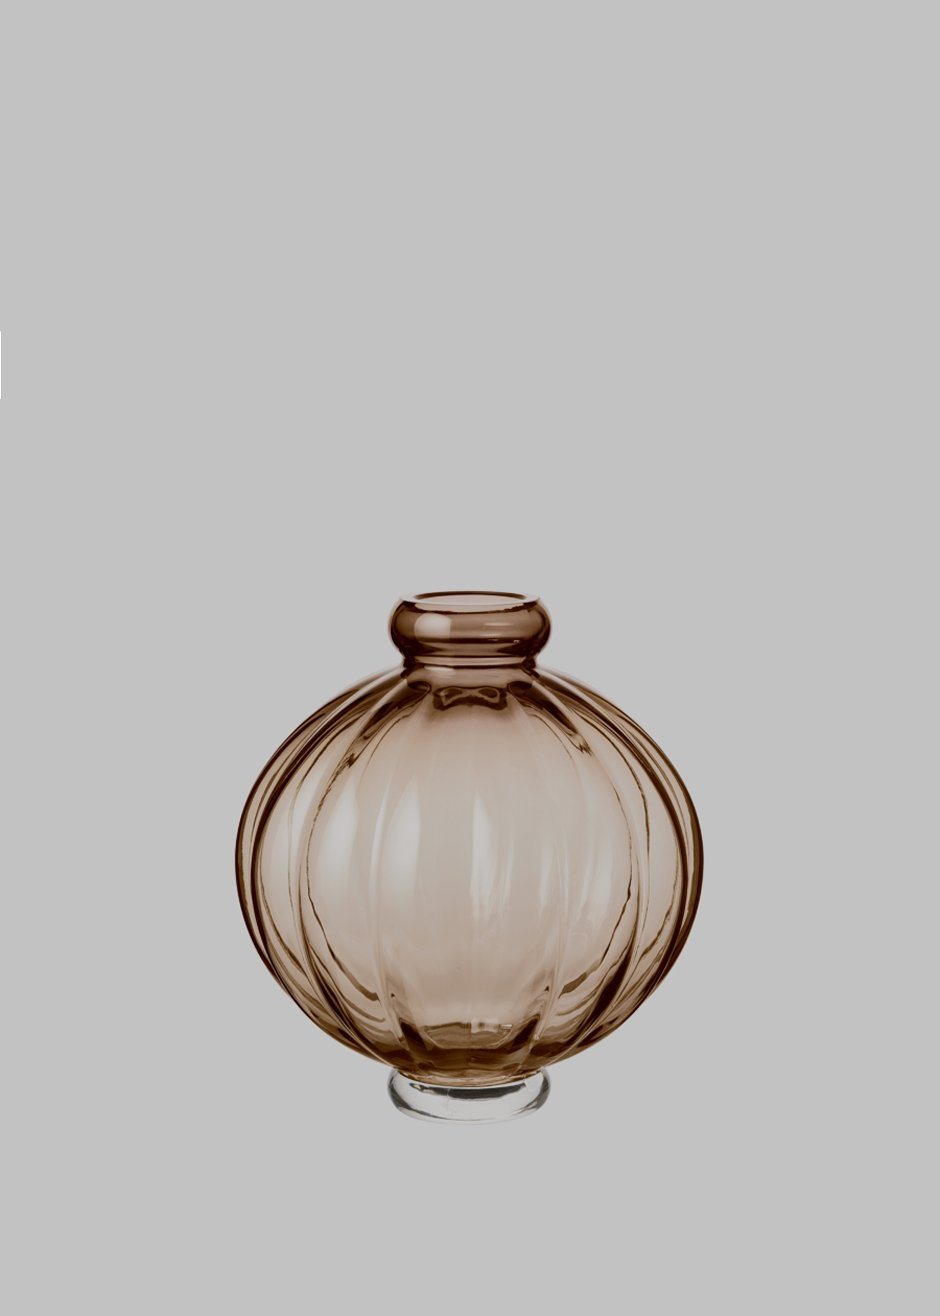 Louise Roe Glass Balloon Vase 01 - Smoke - 5